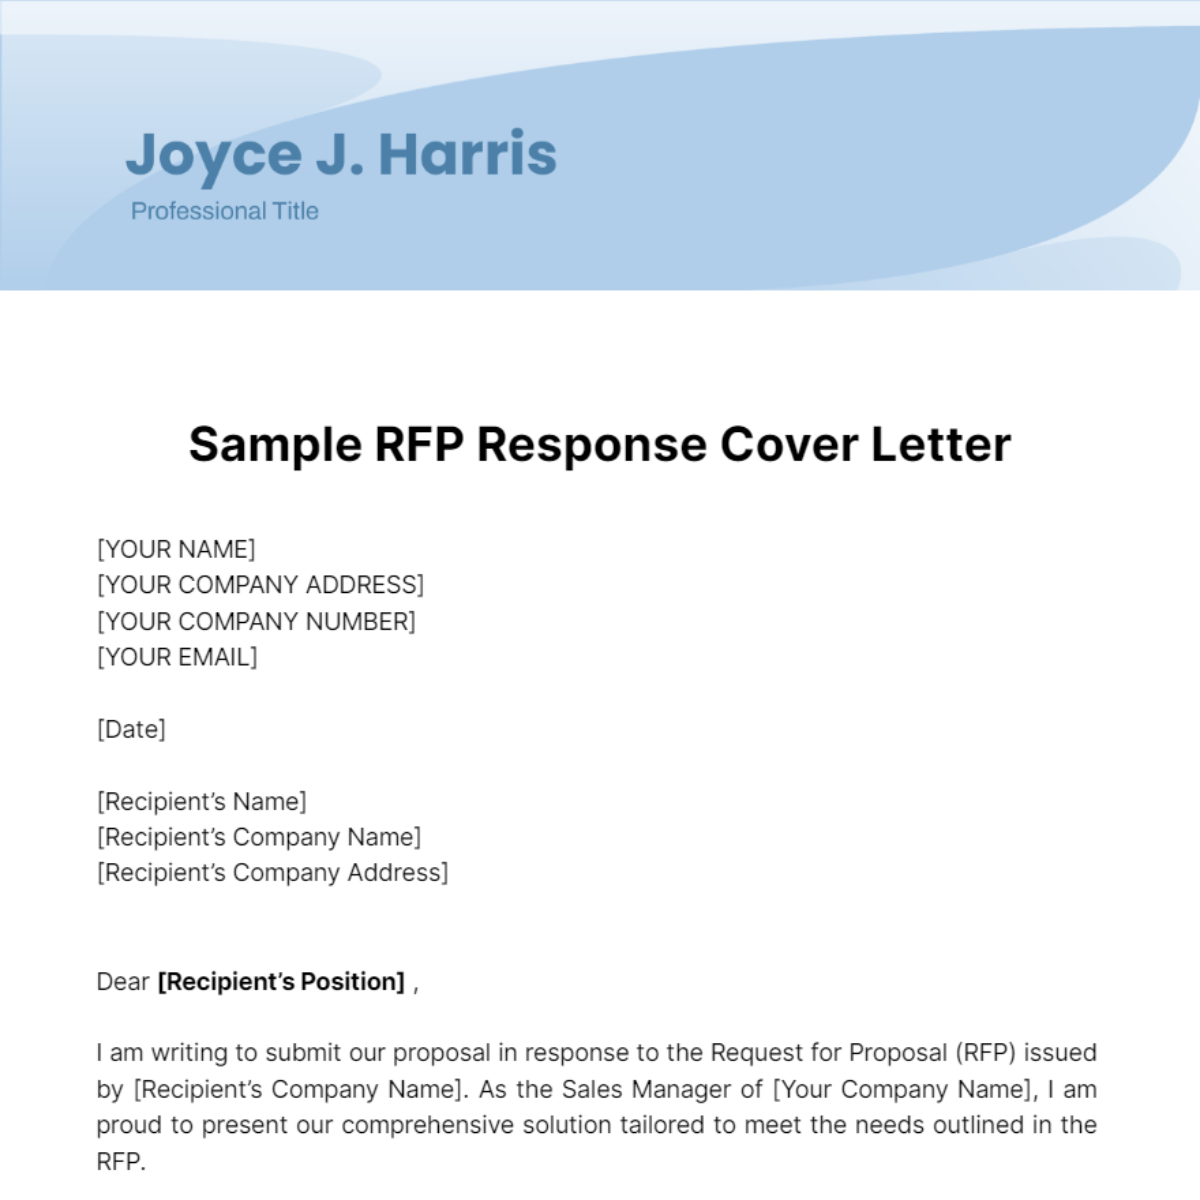 Sample RFP Response Cover Letter Template